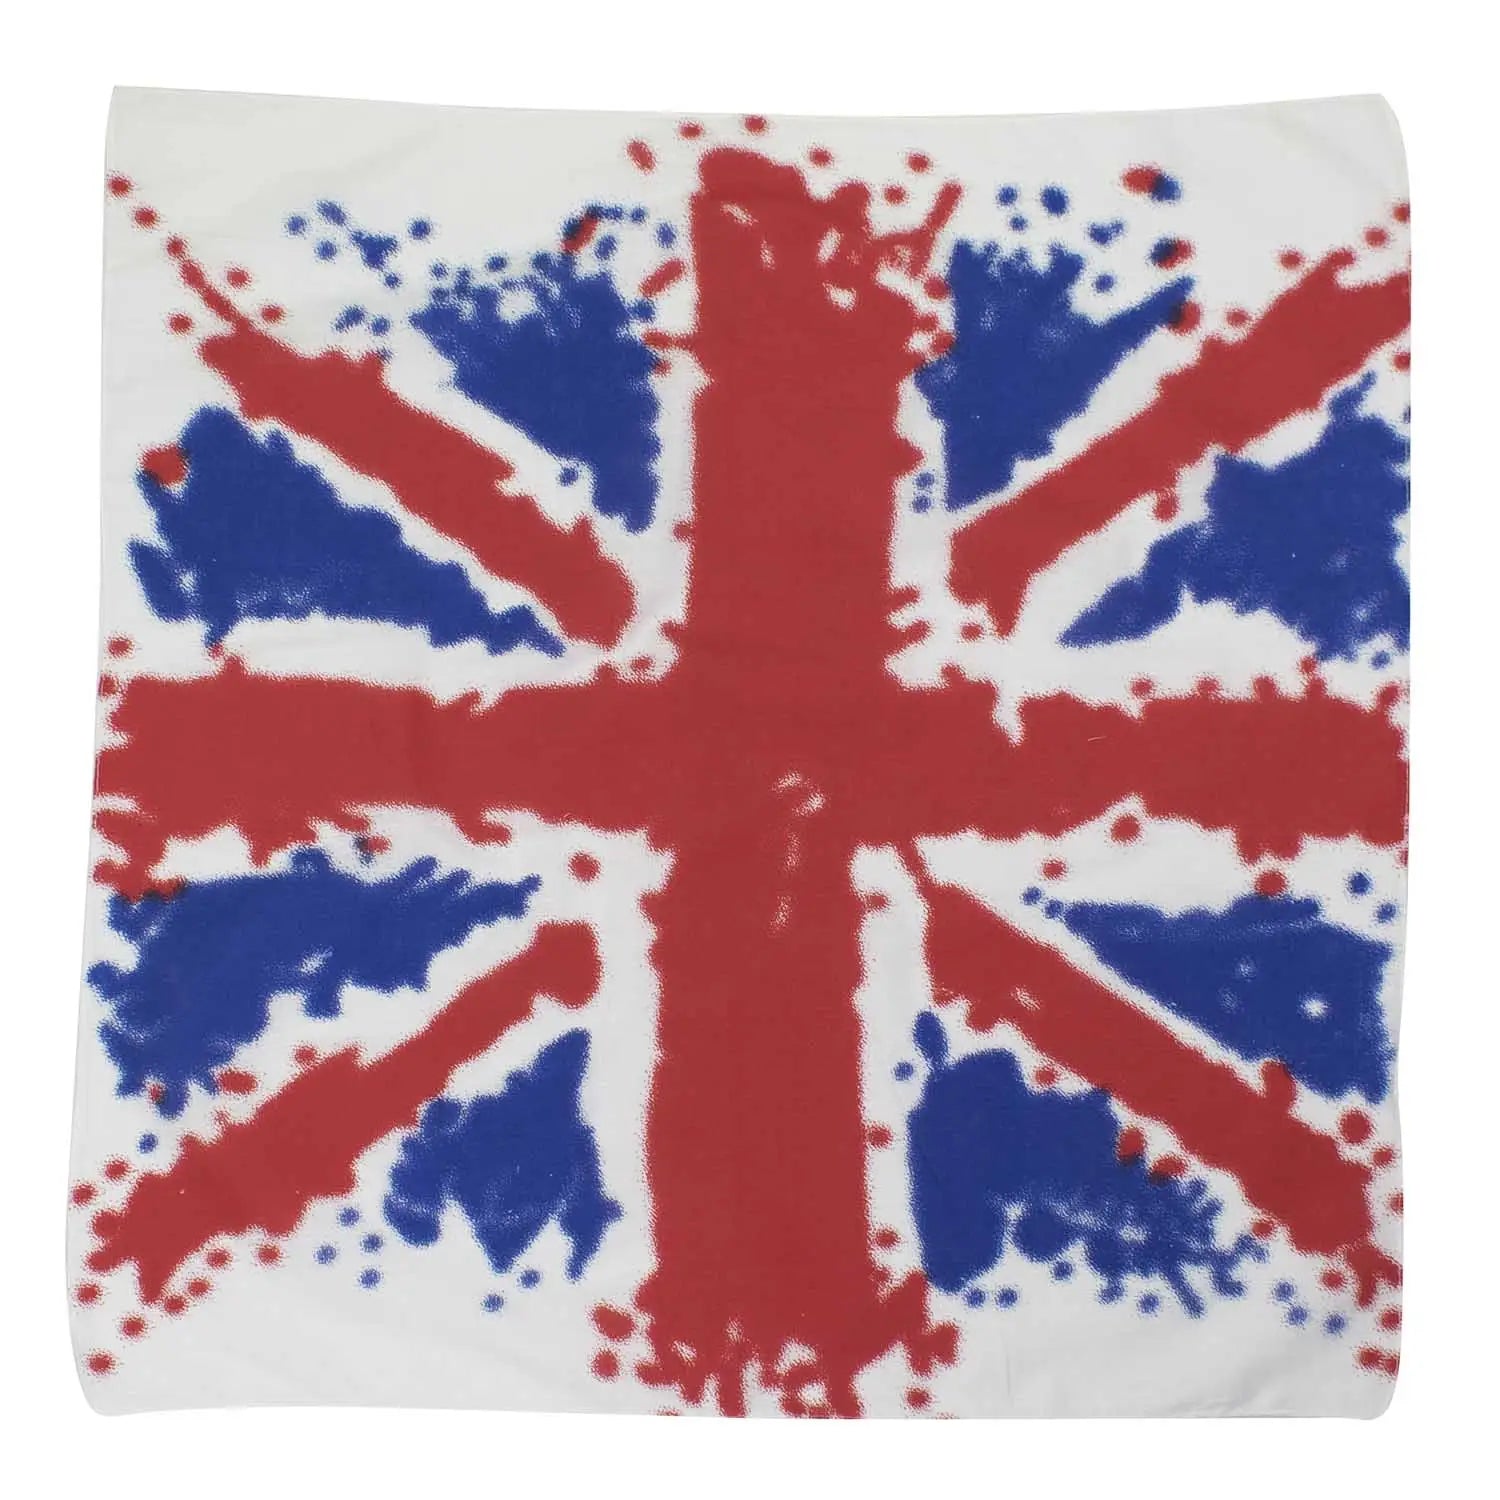 Union Jack Print Bandana - British flag with paint speckles